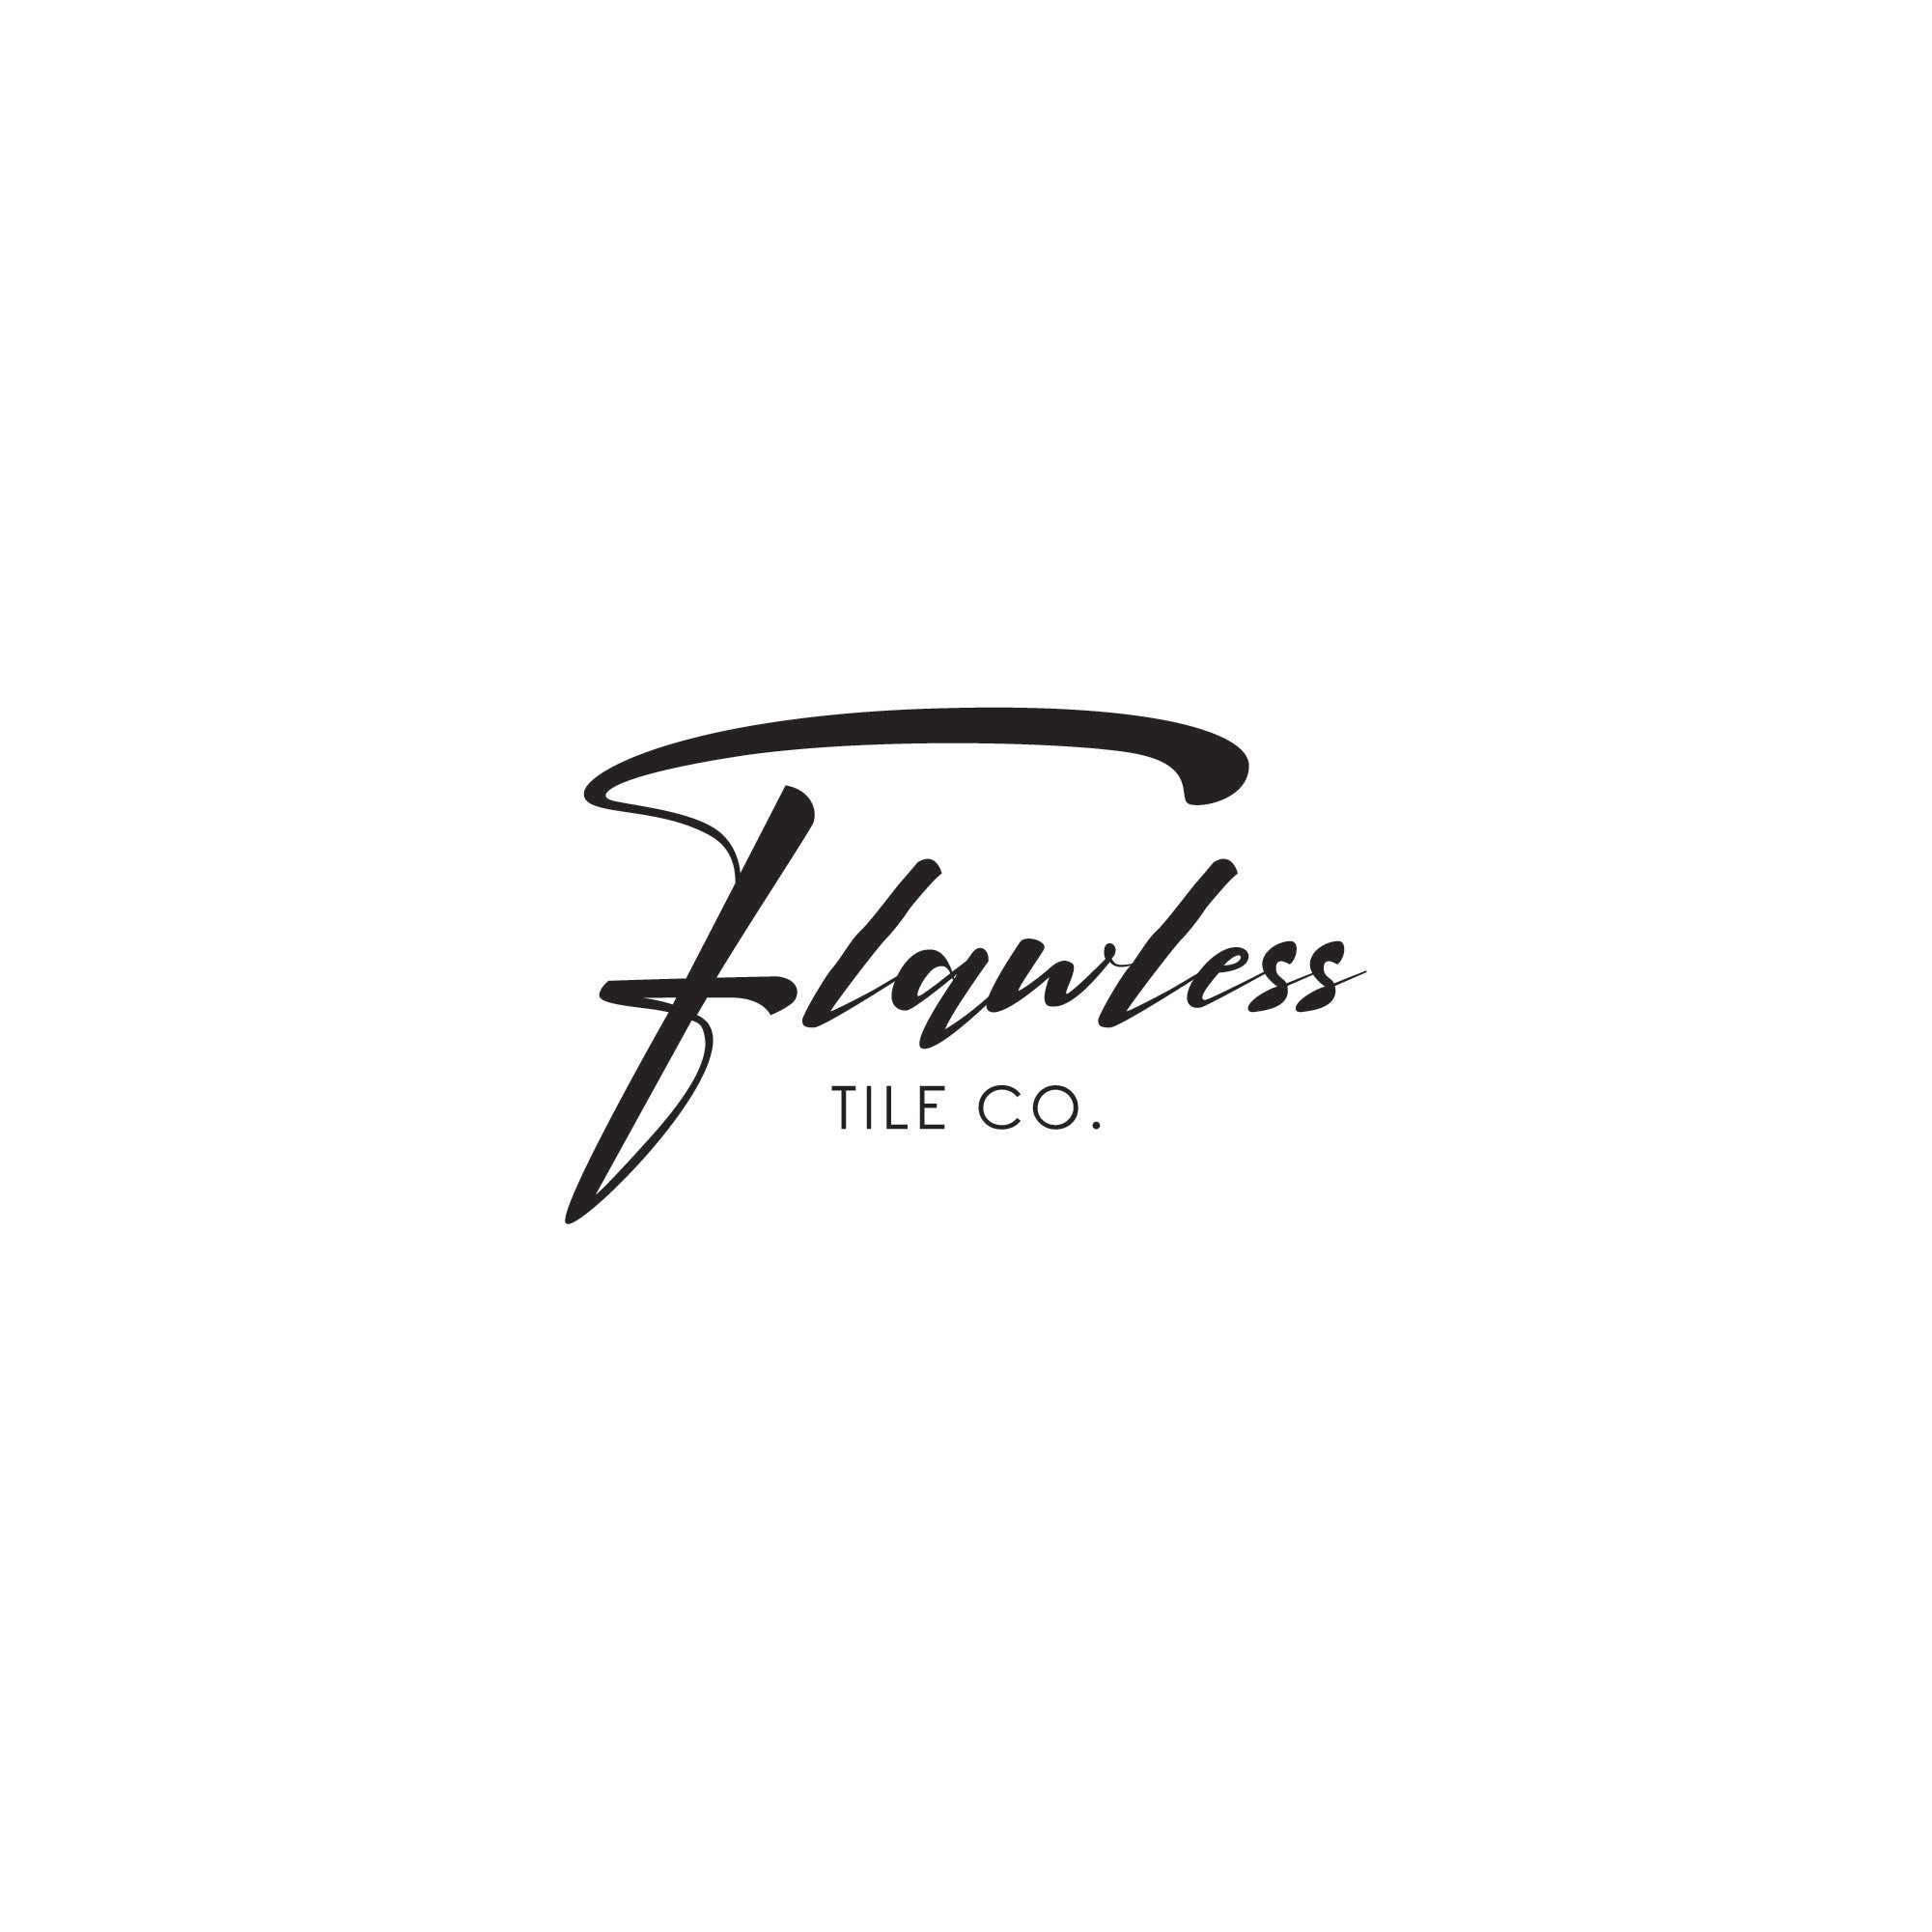 Flawless Tile Company Logo